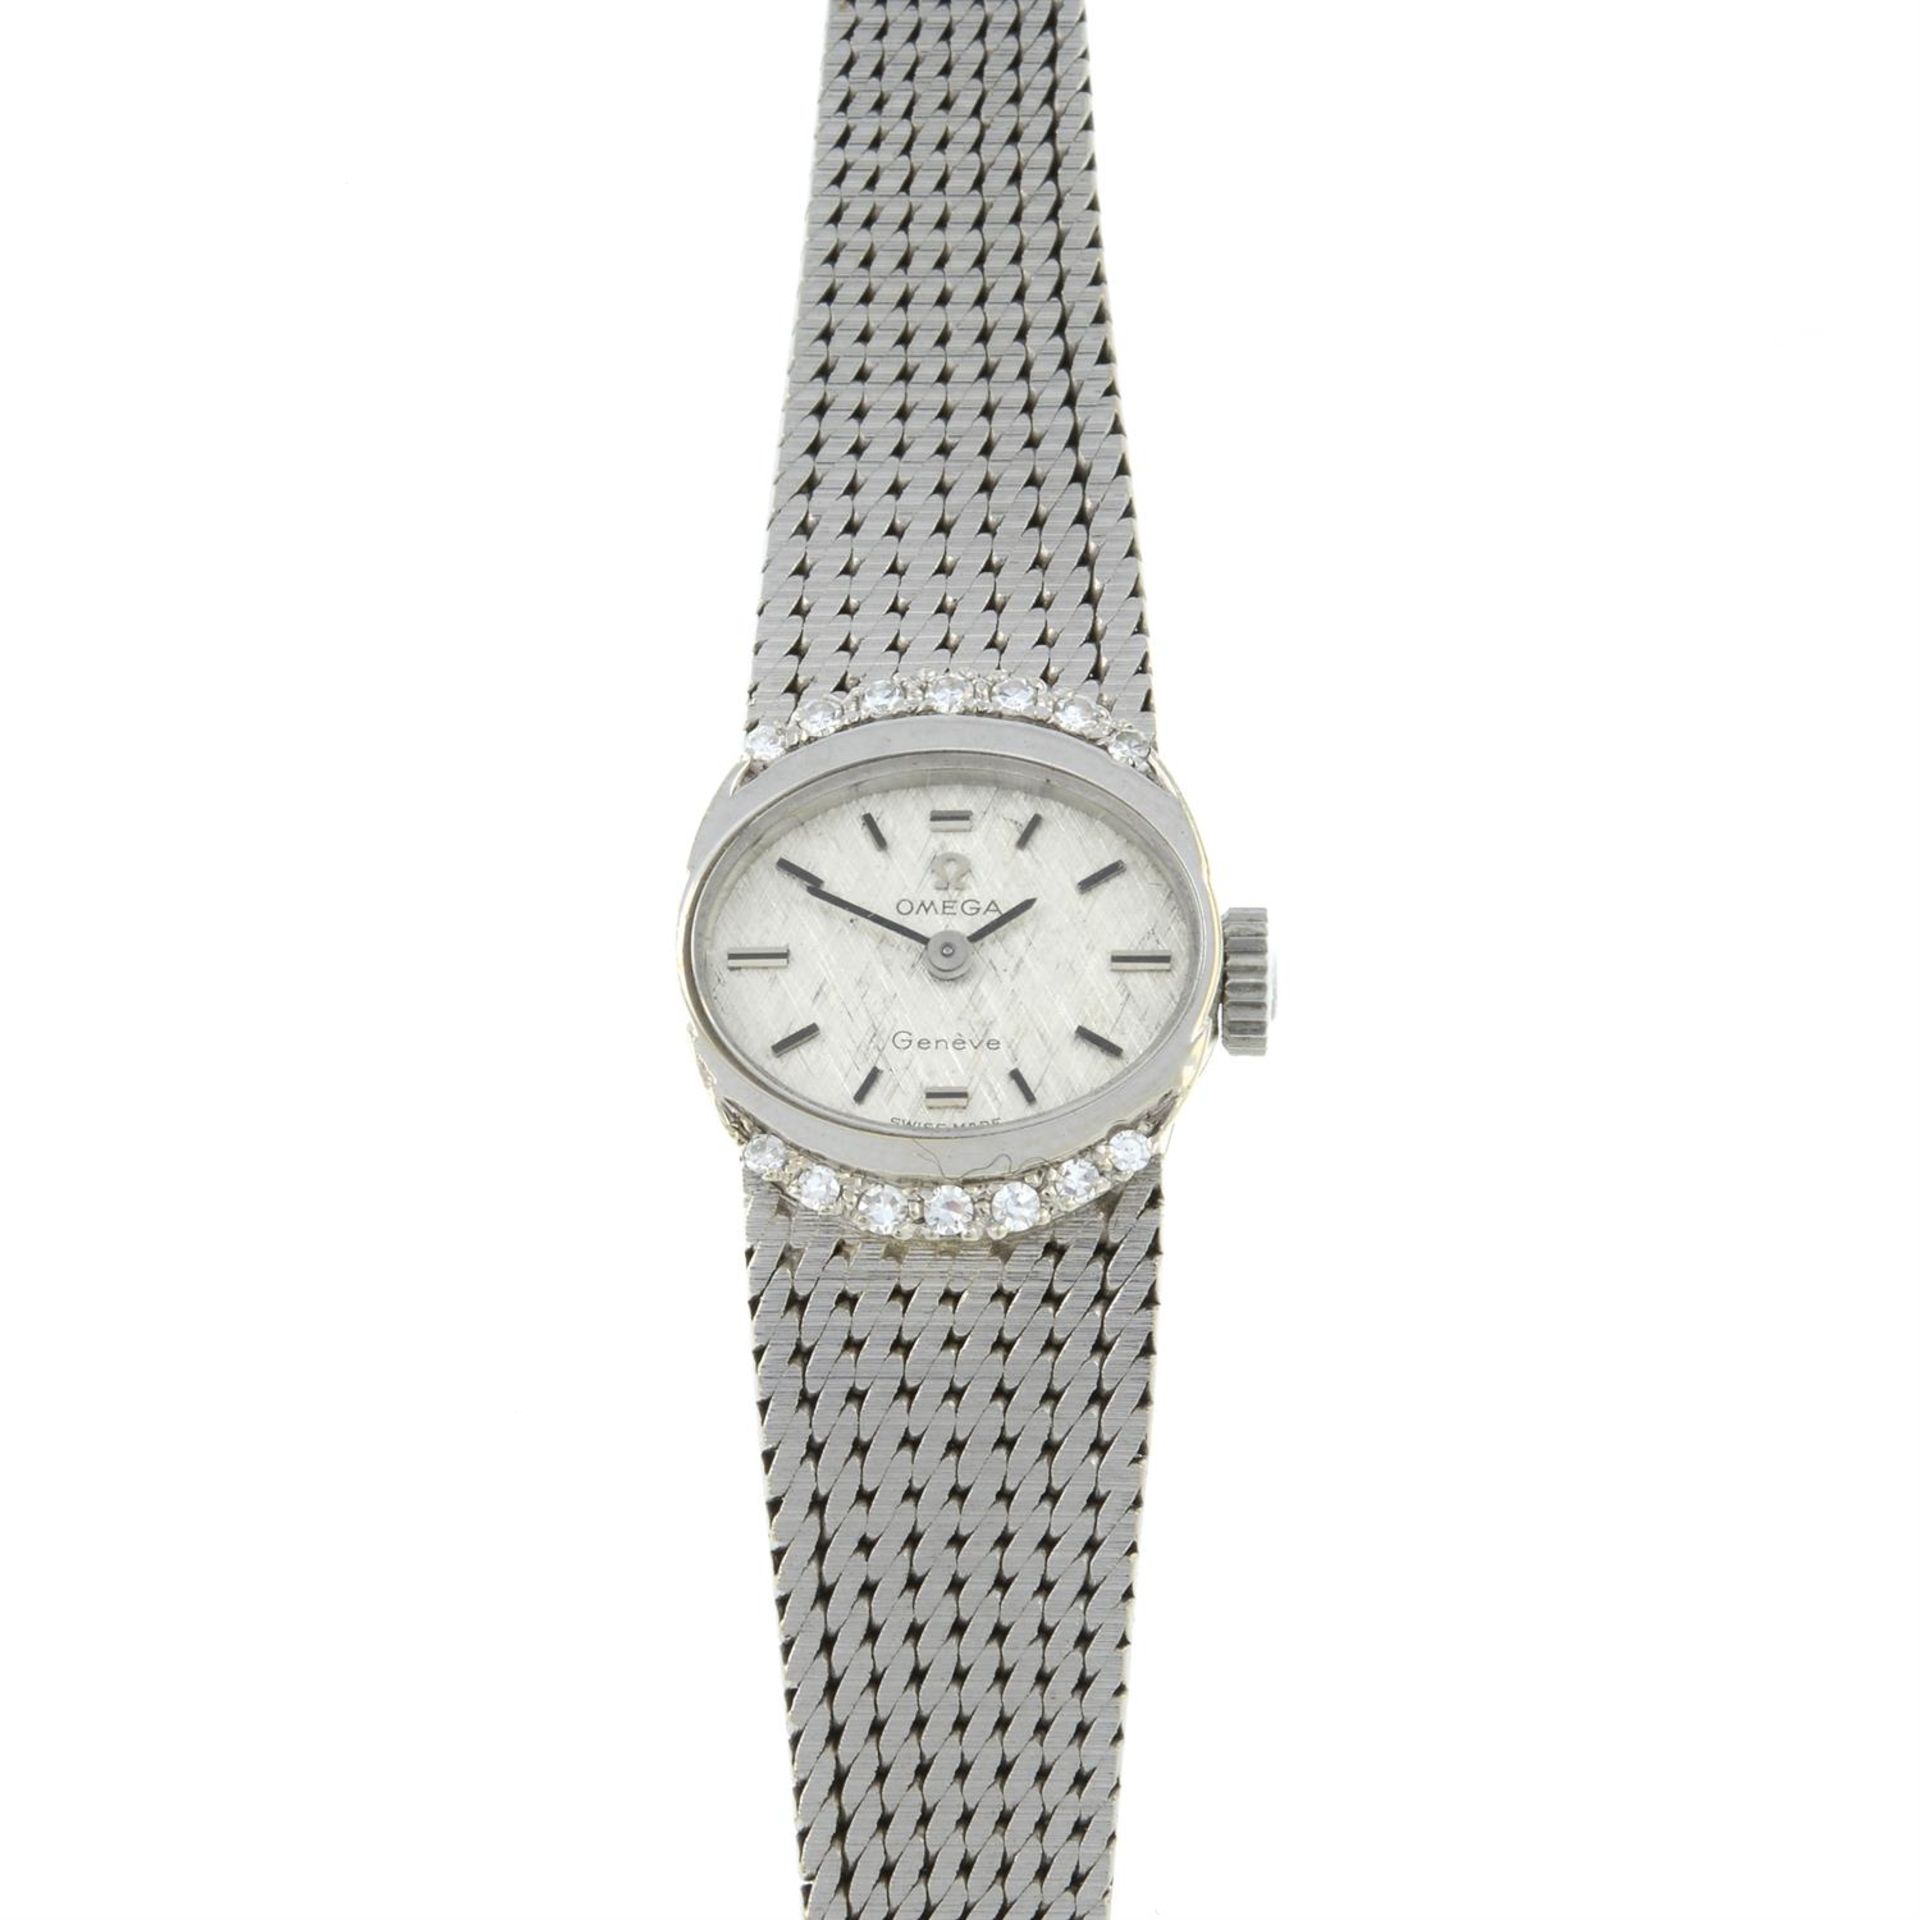 A lady's 18ct gold wrist watch, with single-cut diamond bezel, by Omega.